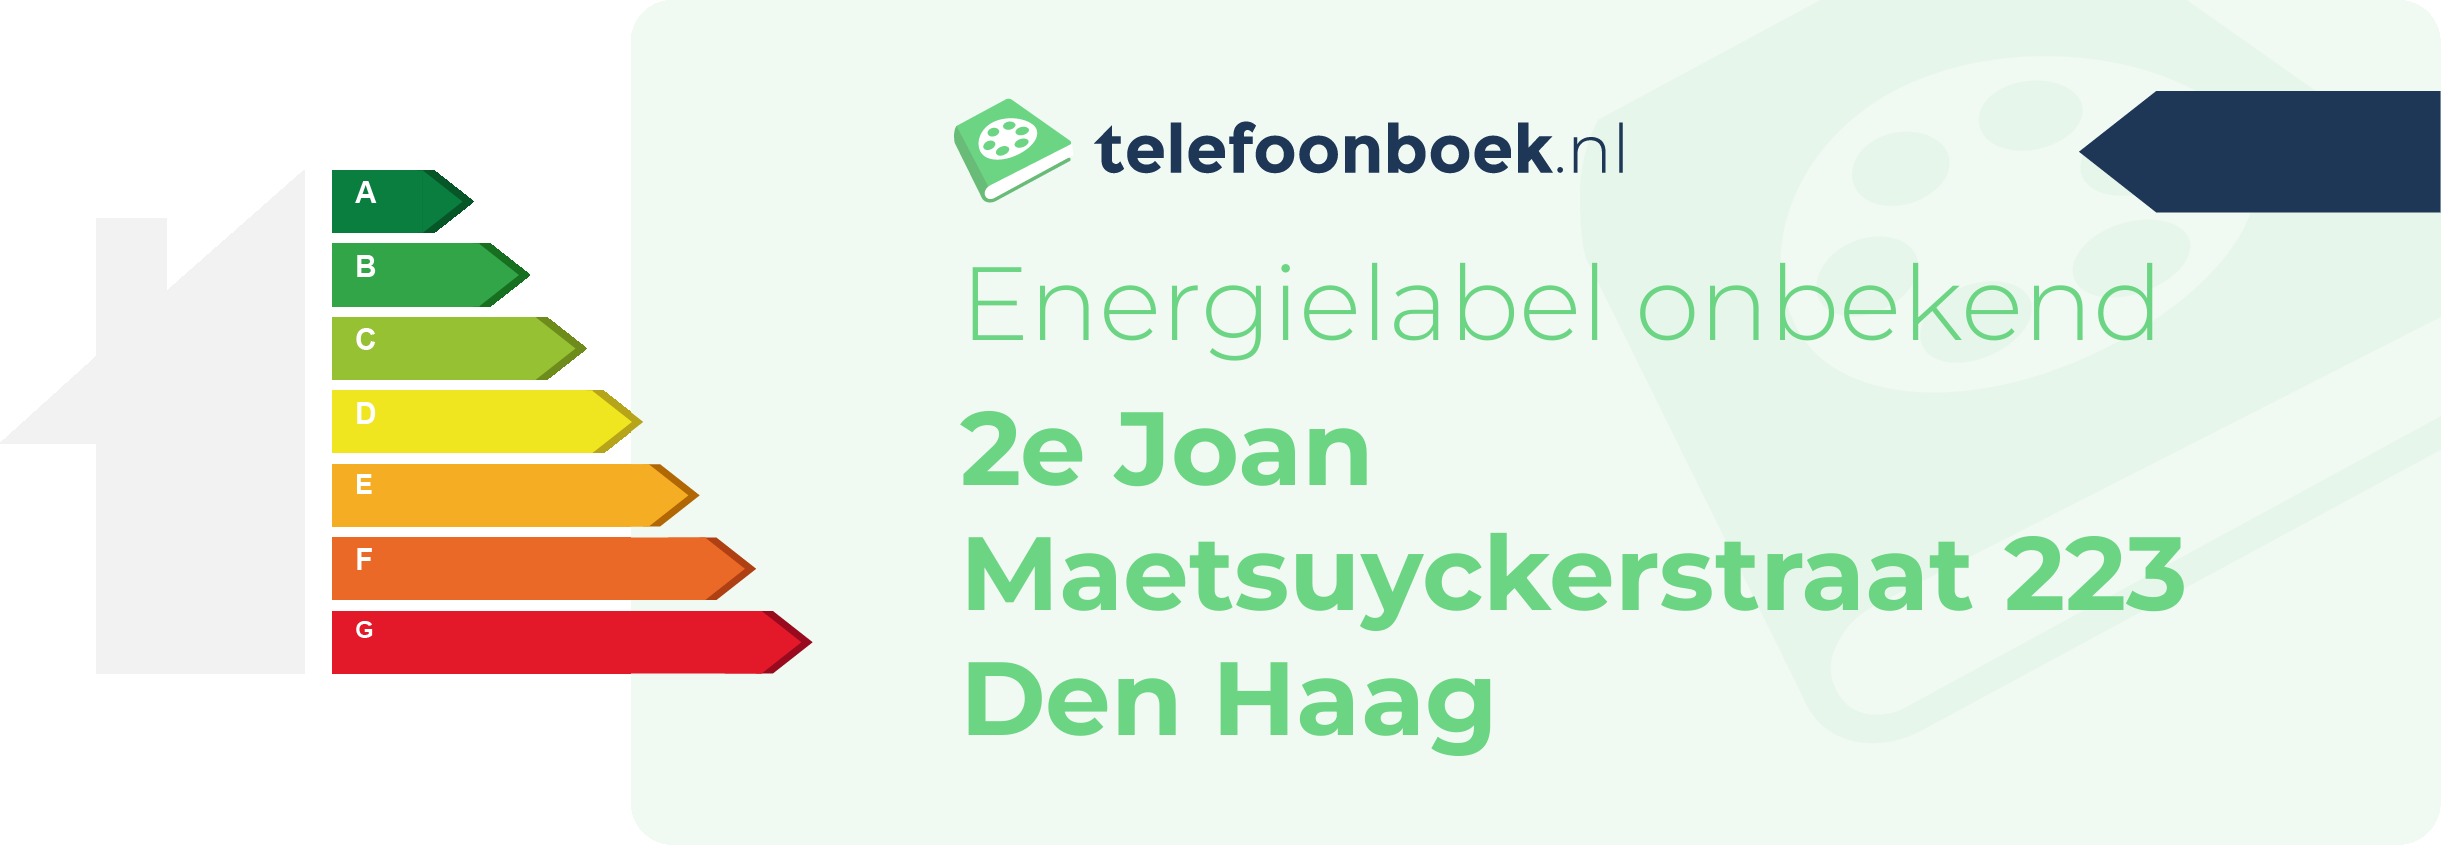 Energielabel 2e Joan Maetsuyckerstraat 223 Den Haag